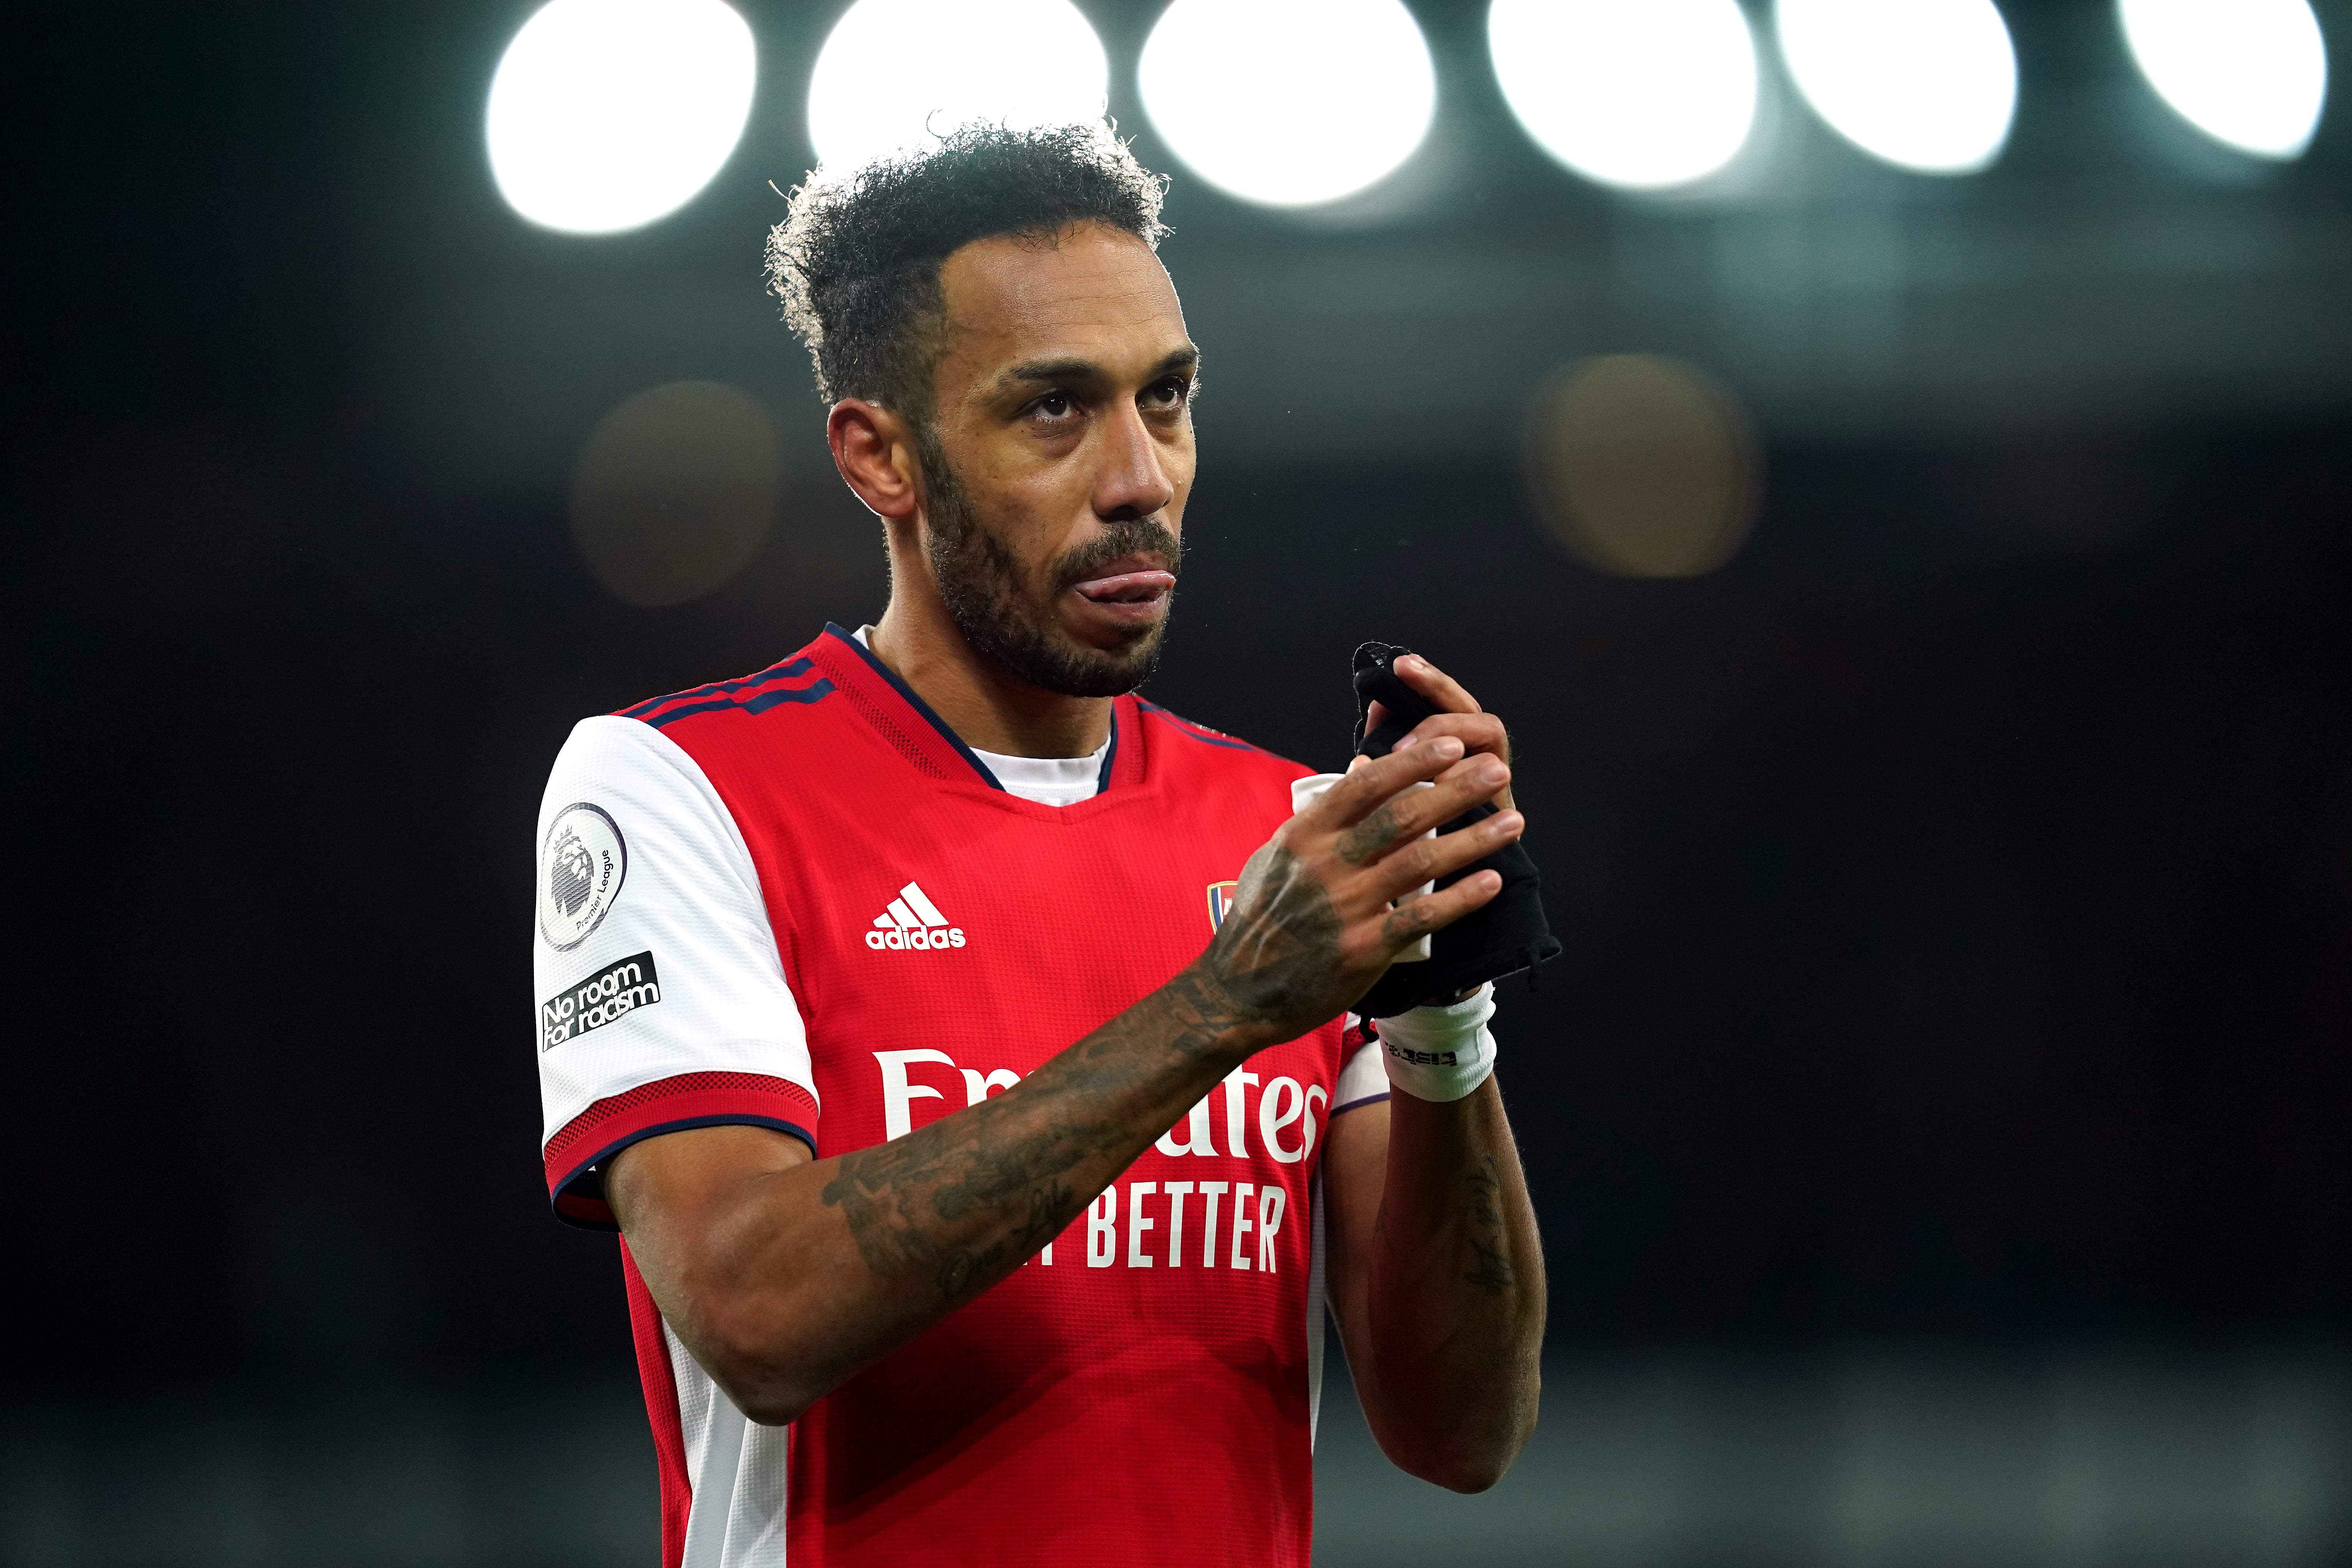 Pierre-Emerick Aubameyang is set to leave Arsenal